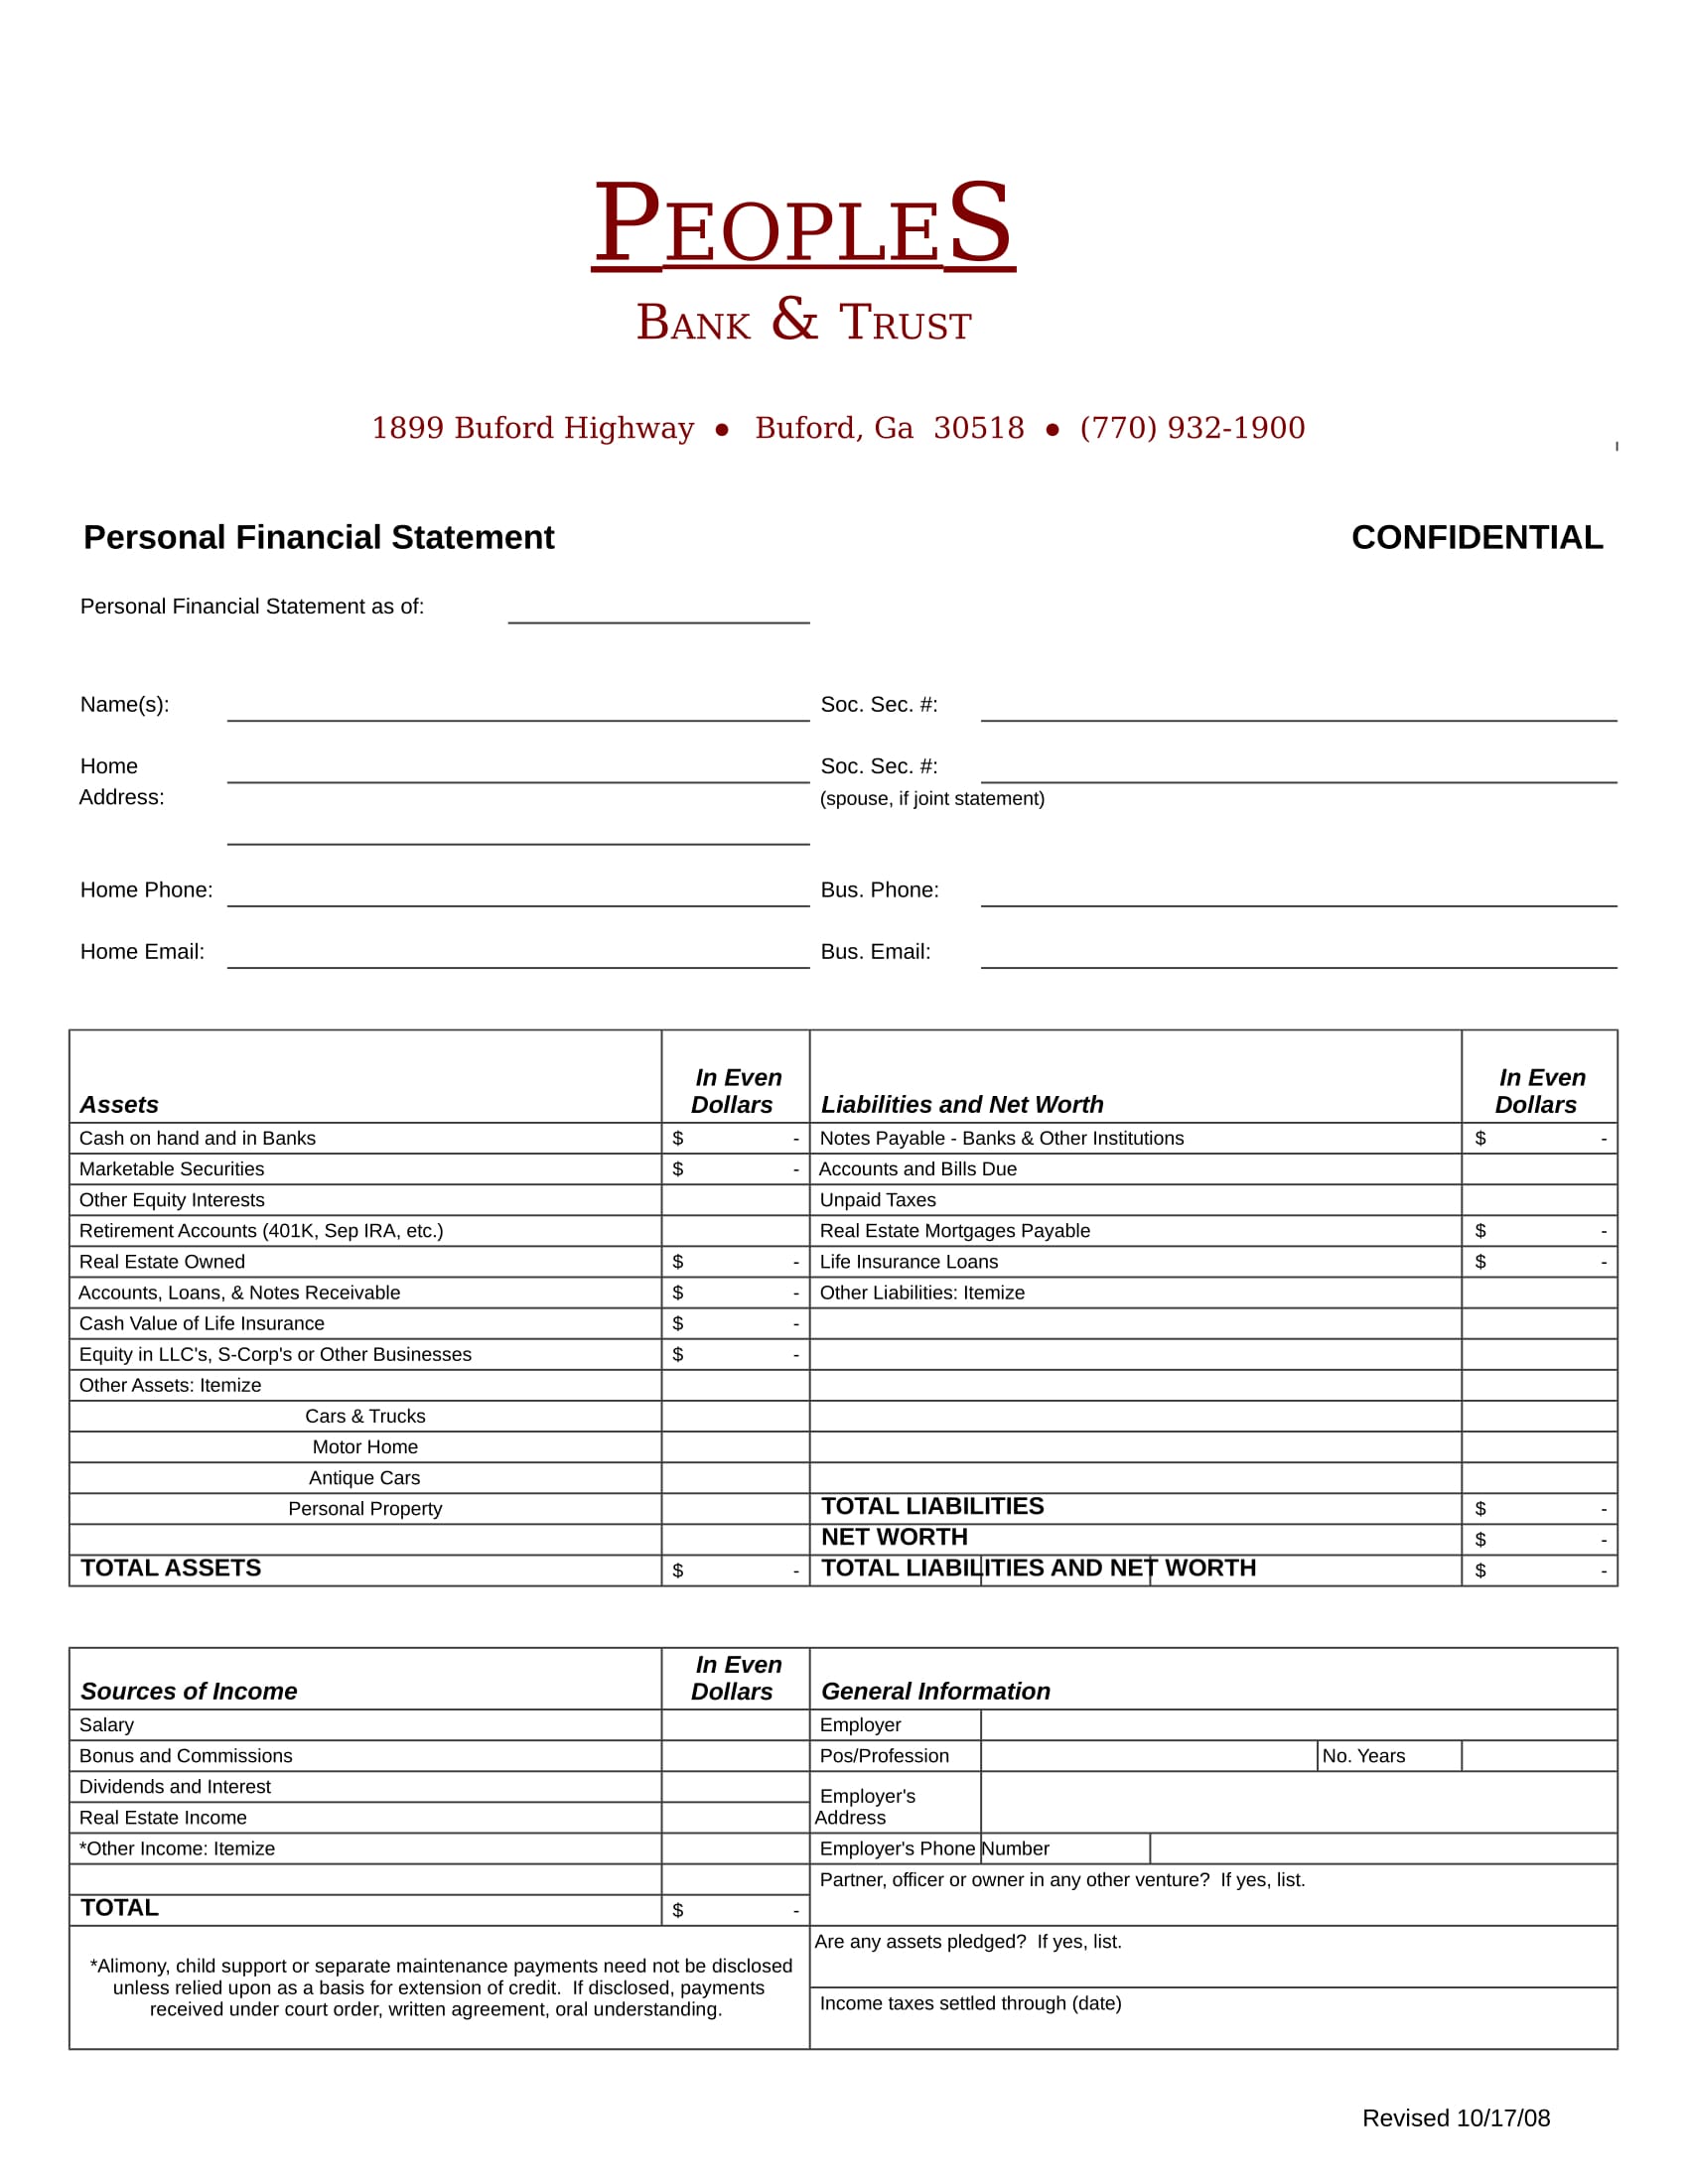 confidential financial statement form 1